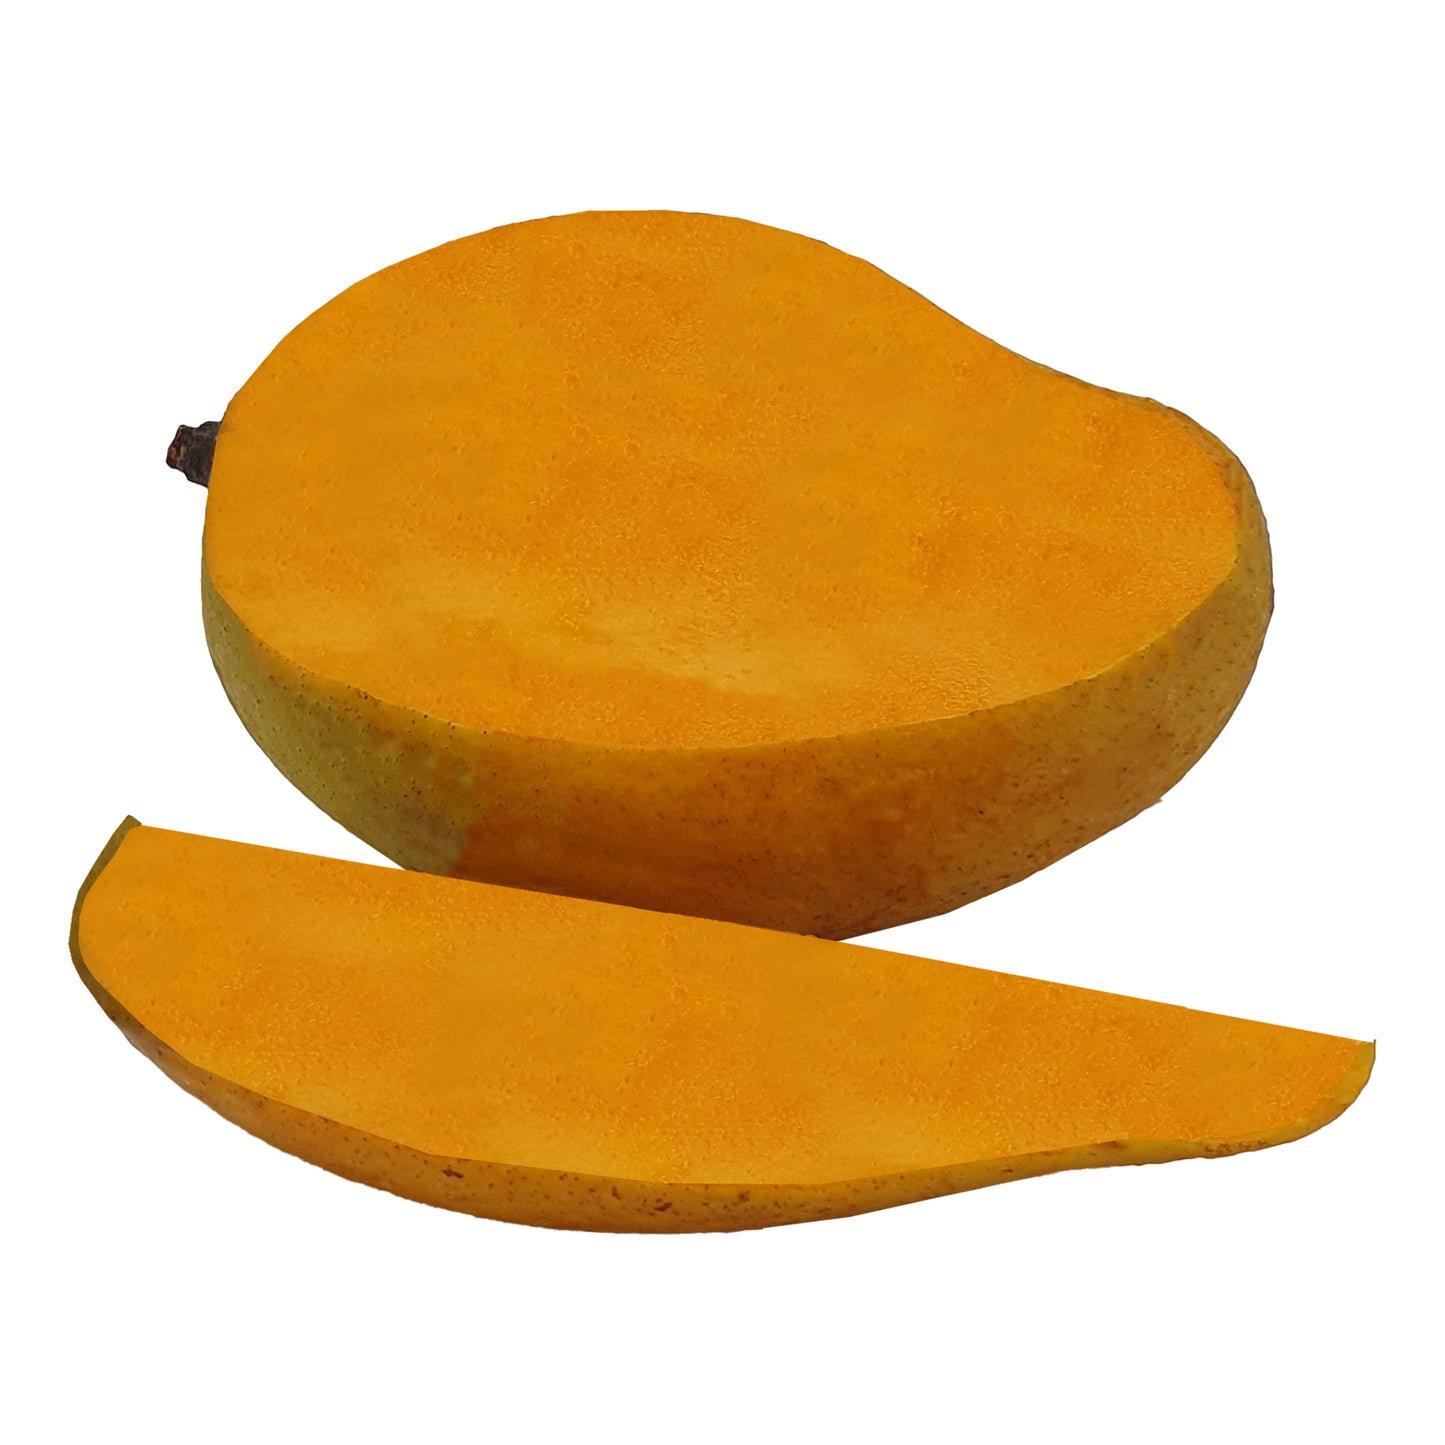 Mangue Alphonso (1 kg)